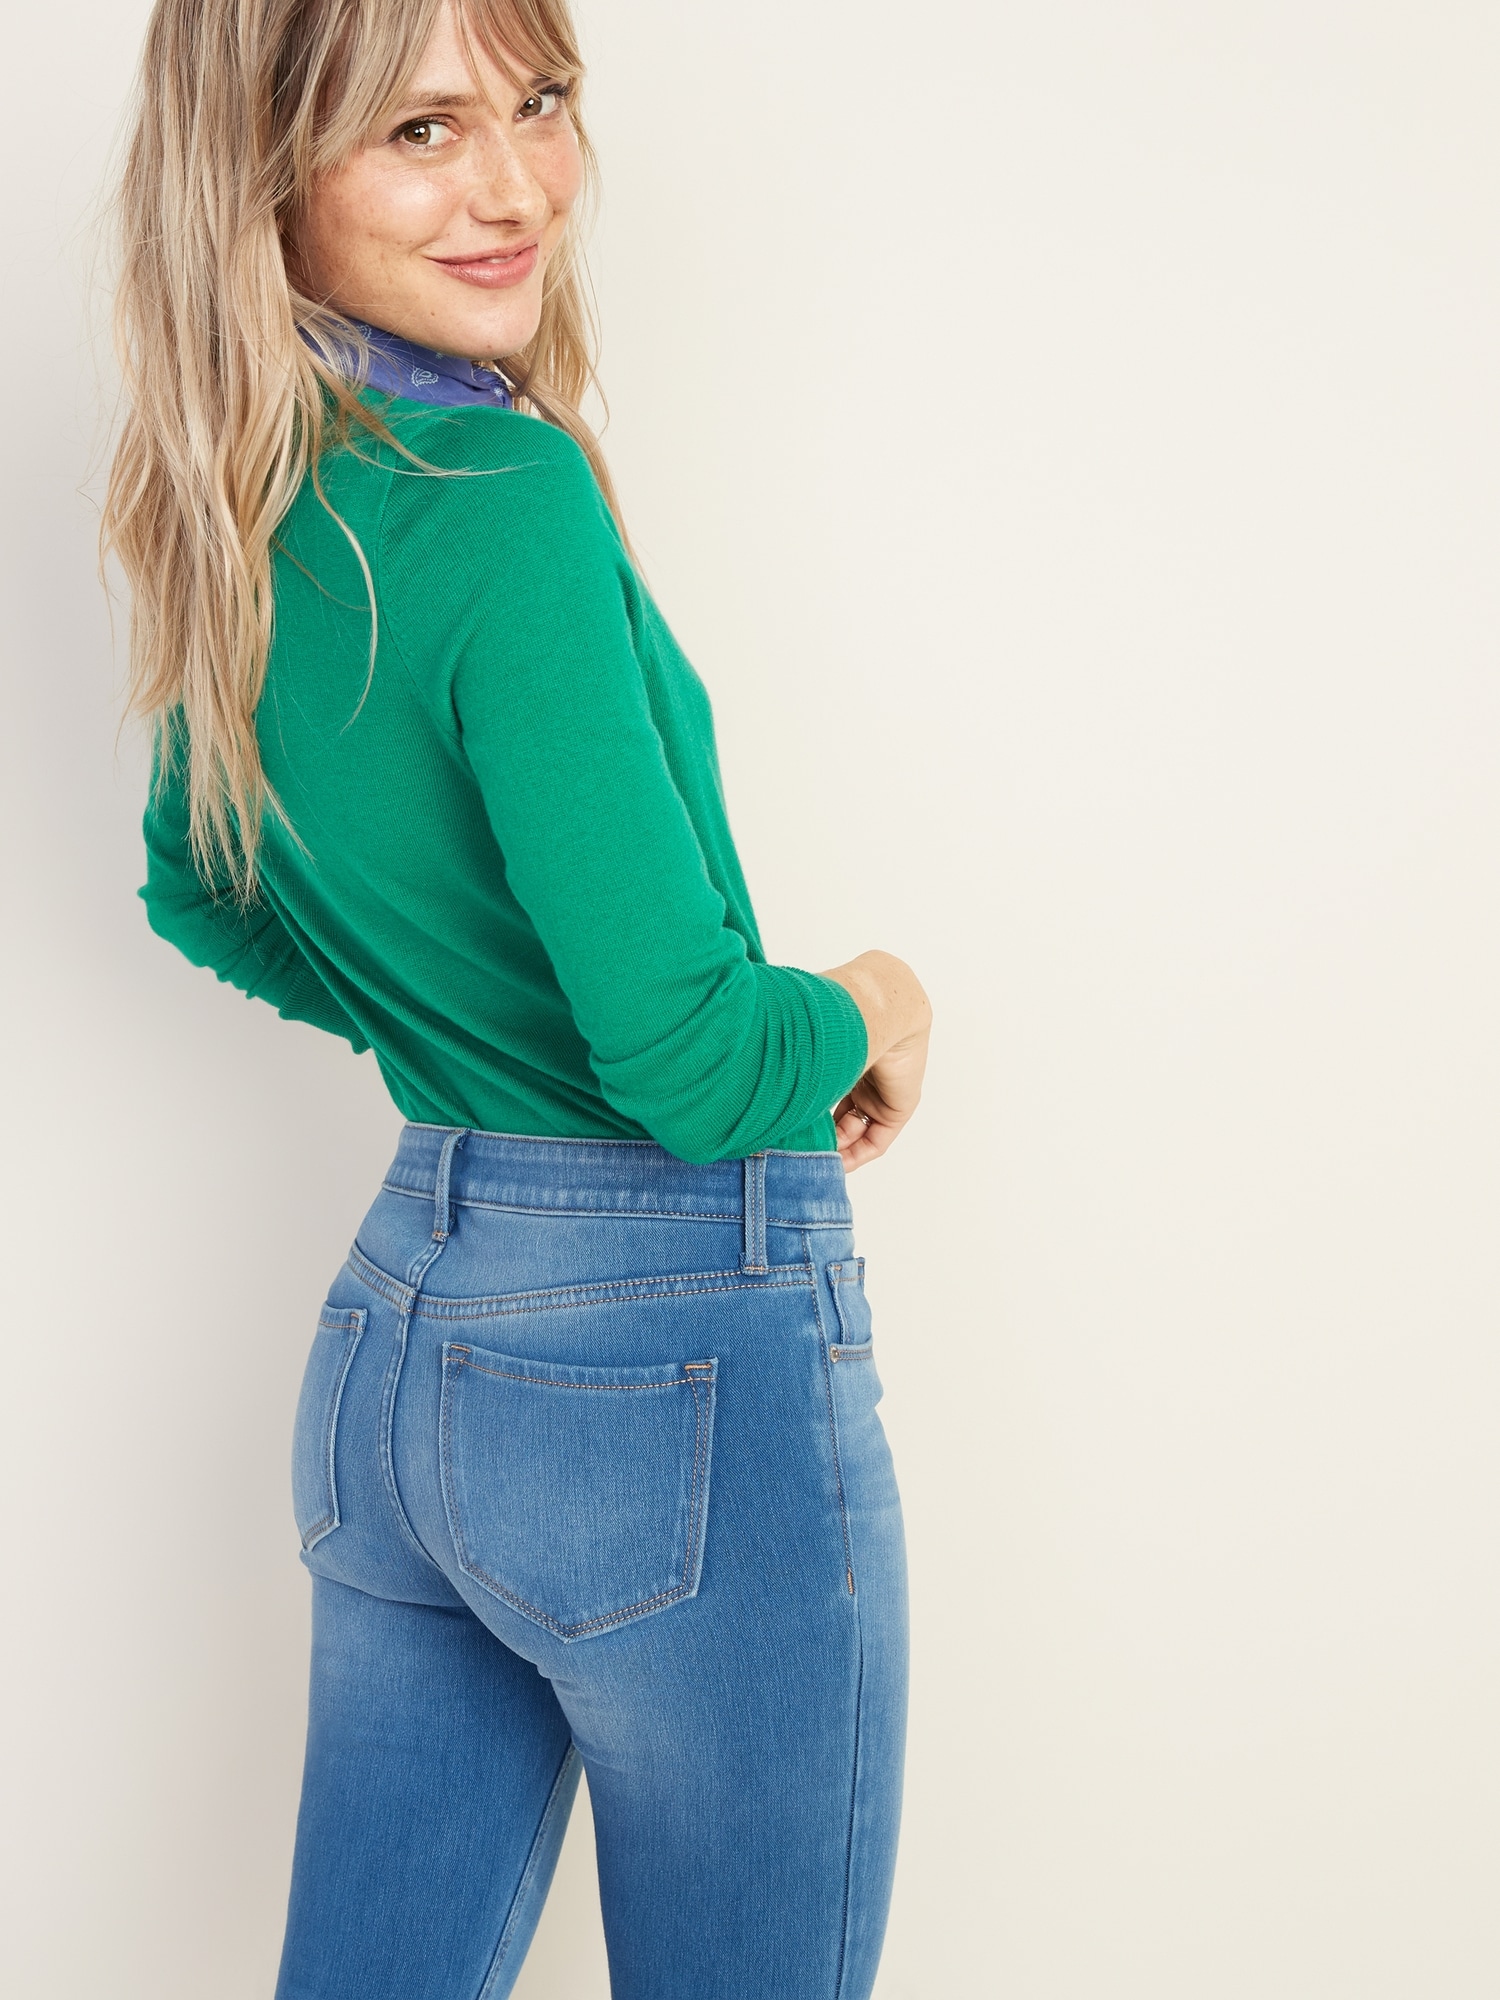 skinny jeans female